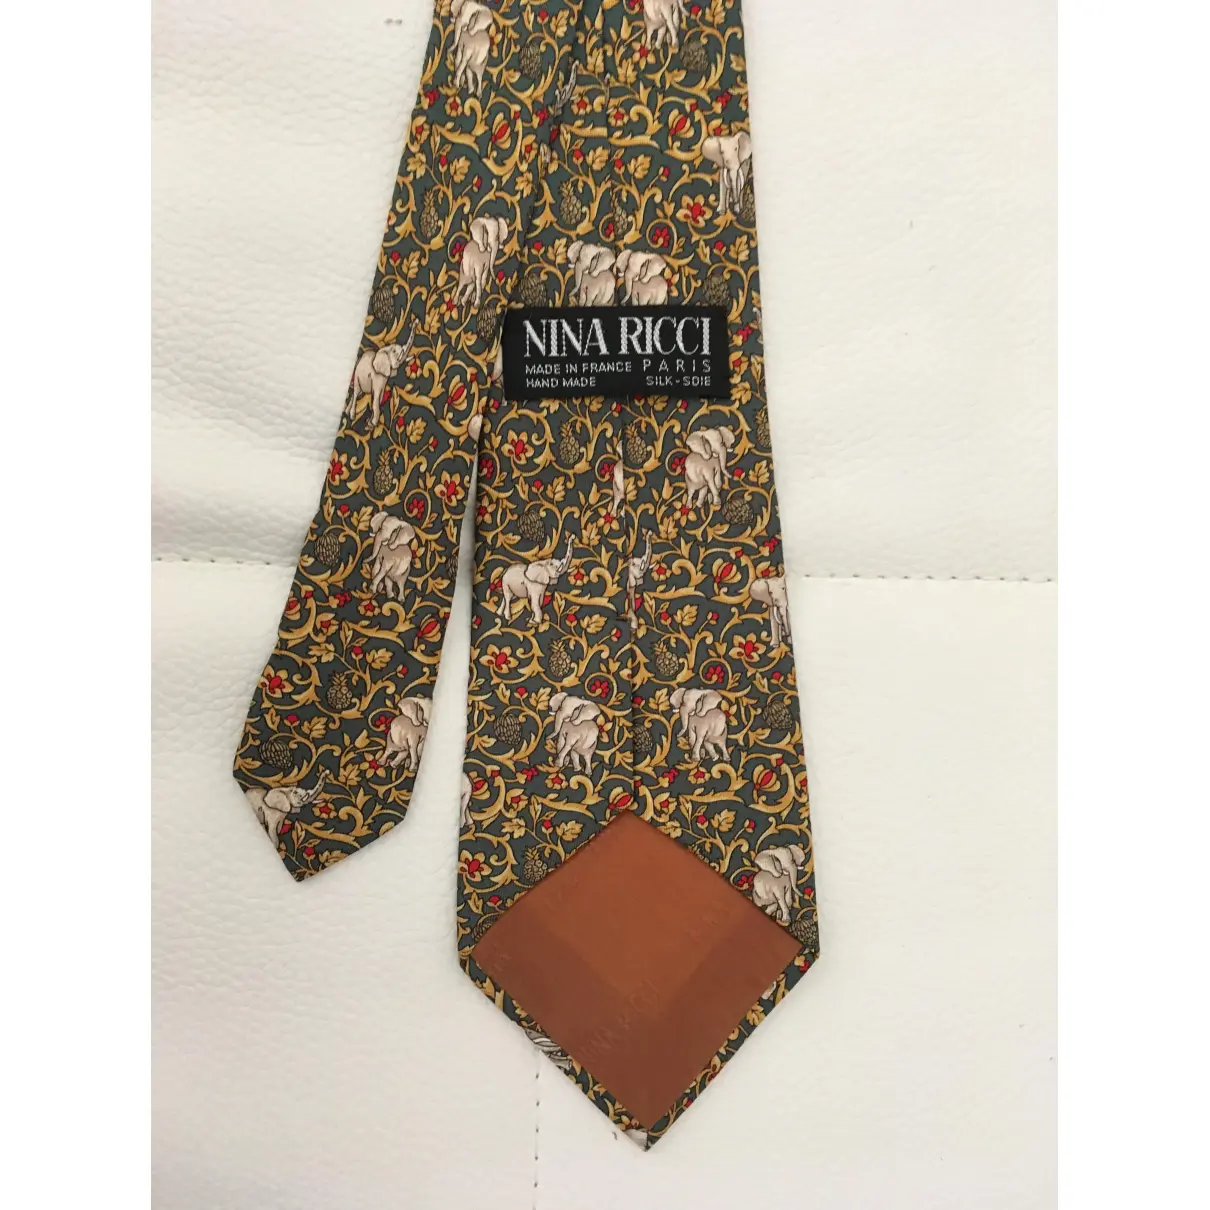 Buy Nina Ricci Silk tie online - Vintage